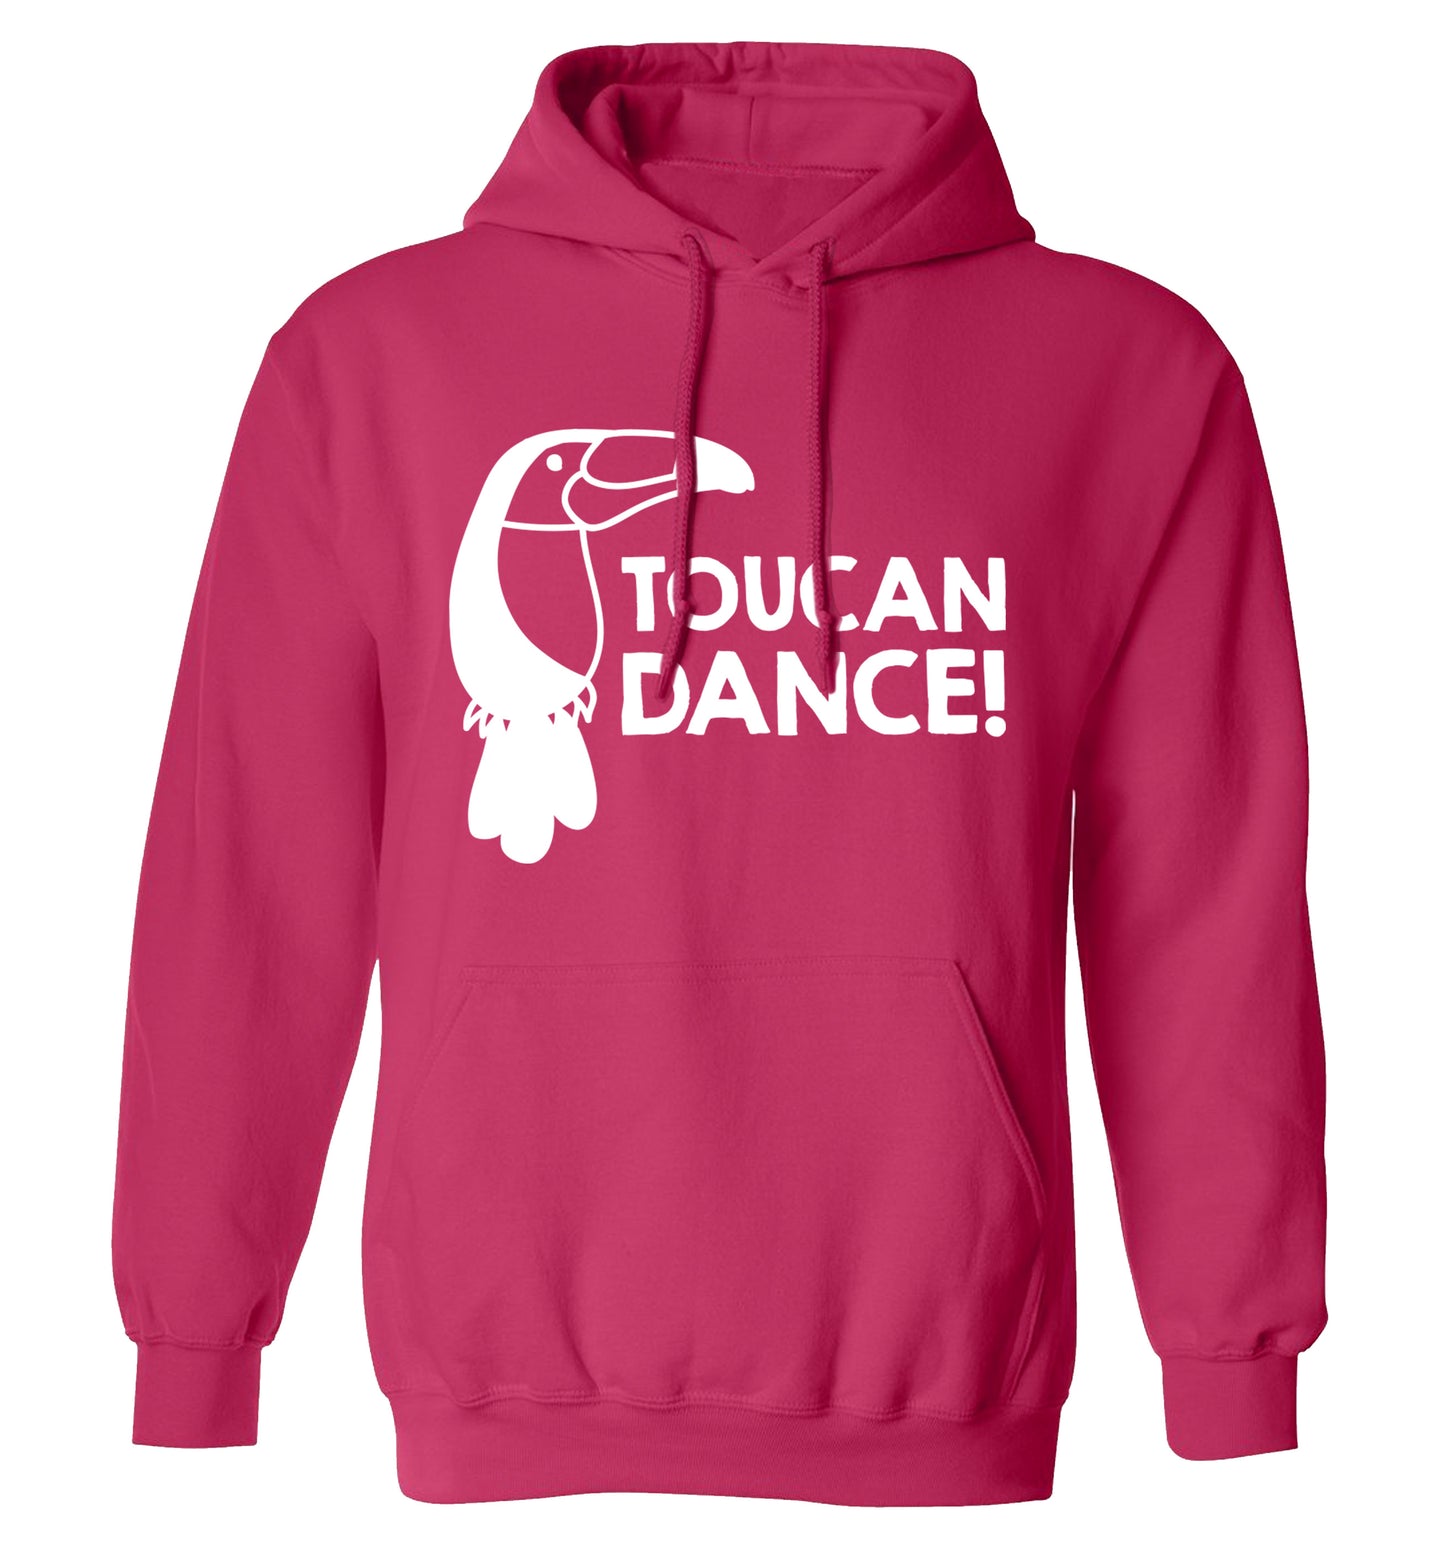 Toucan dance adults unisex pink hoodie 2XL